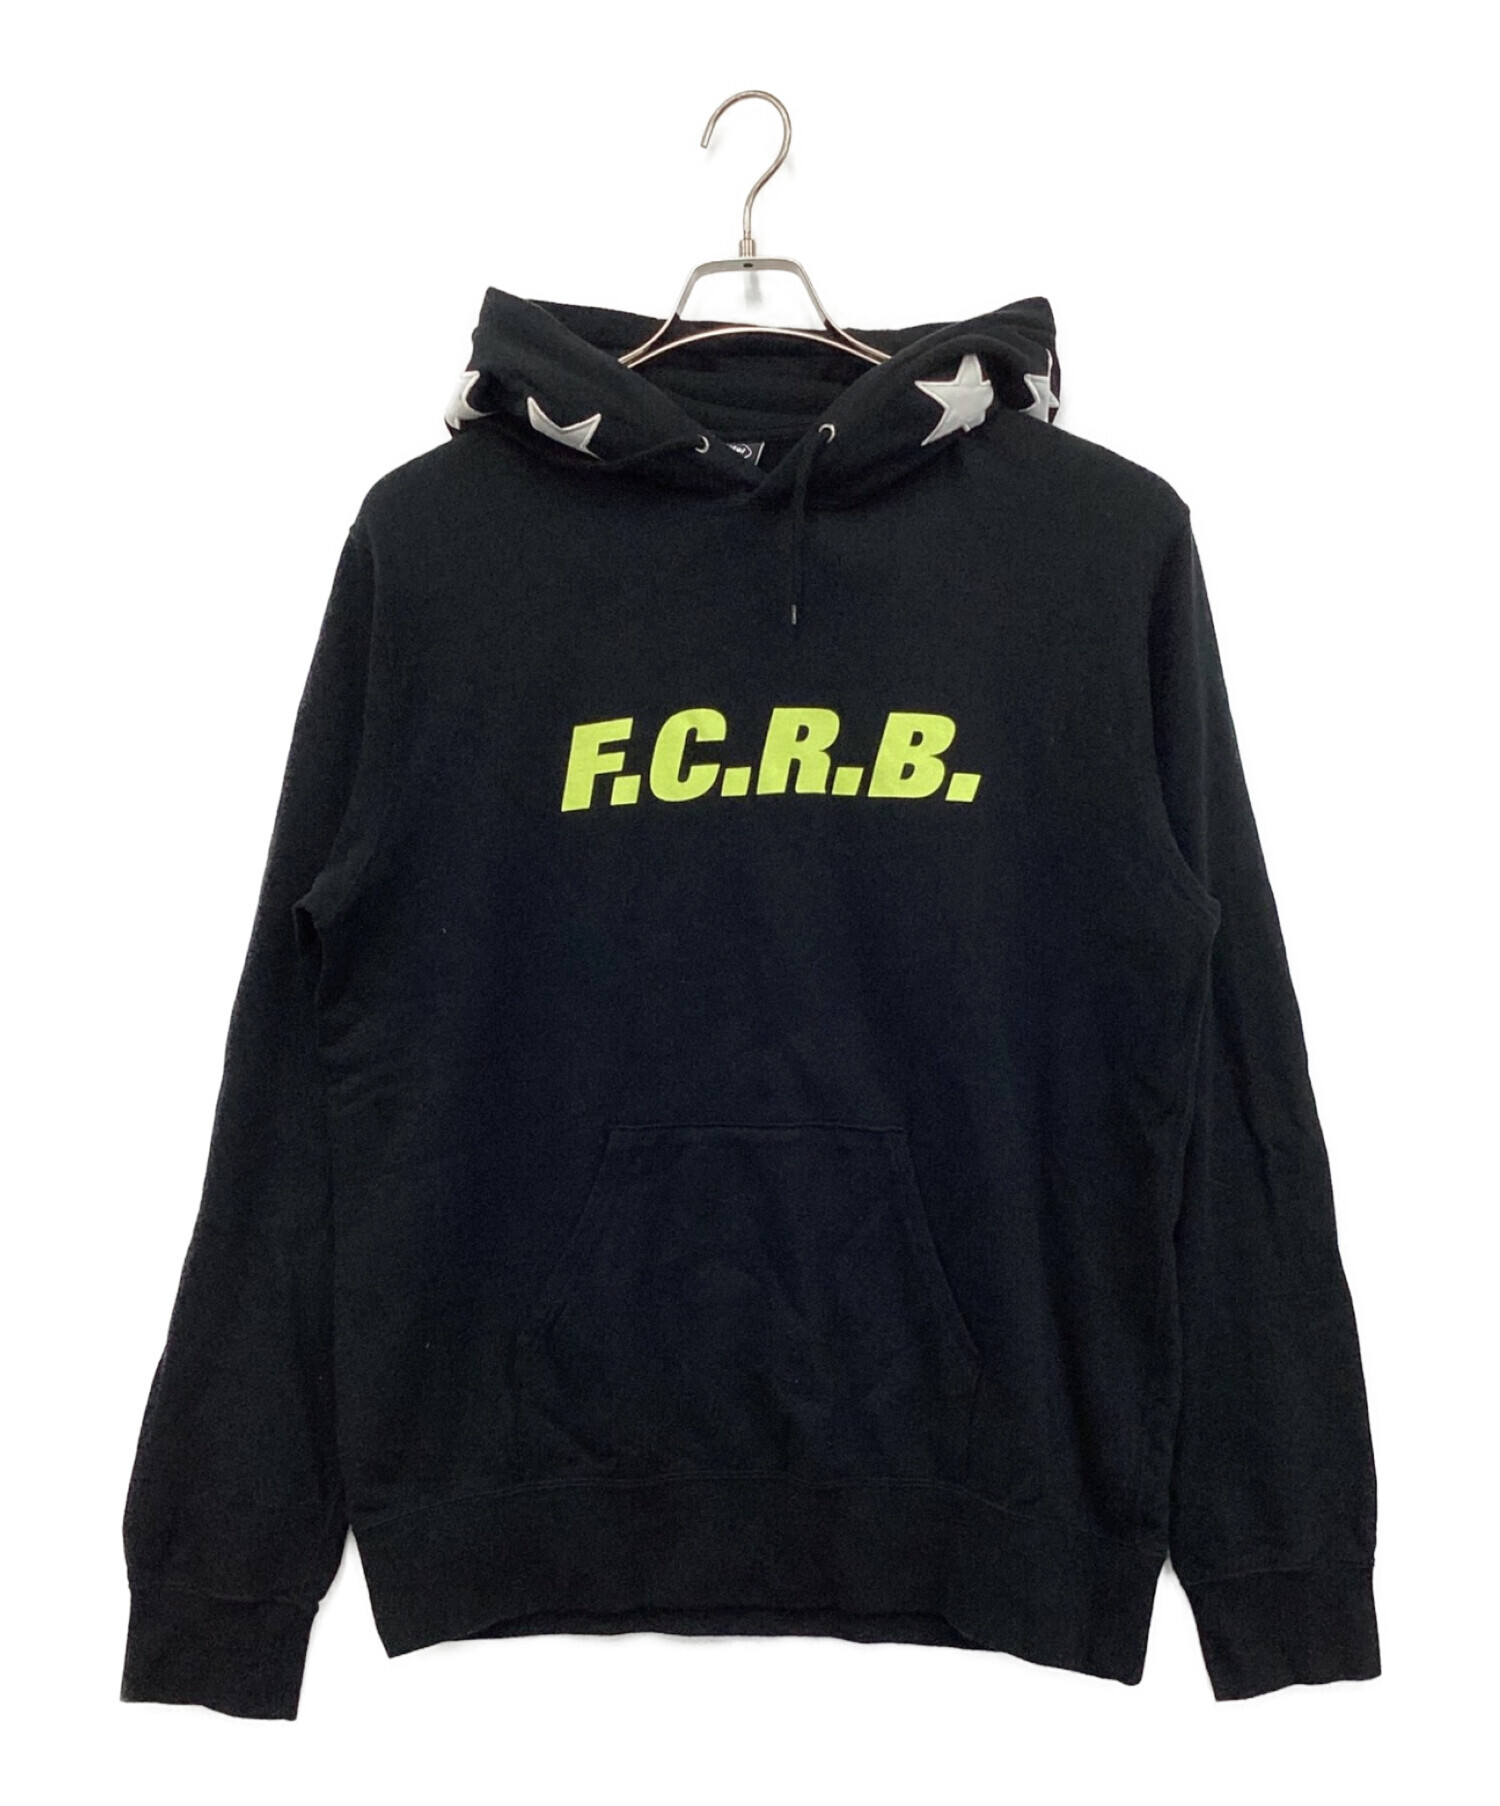 F.C.R.B. (エフシーアールビー) パーカー ブラック×グリーン サイズ:M